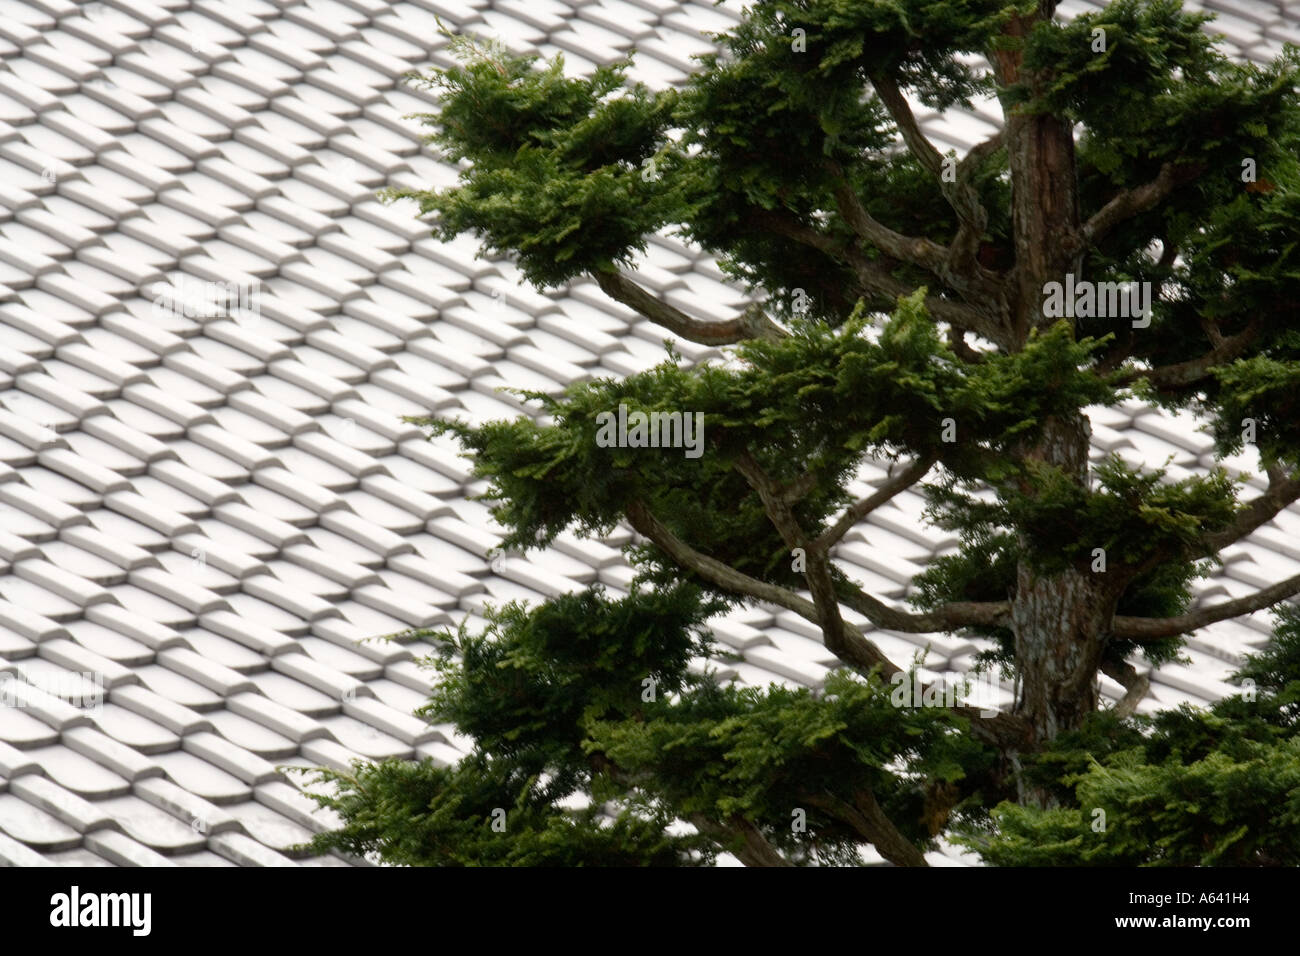 Japan, Kyoto, Konkai Kumyoji Temple, tiled roof and tree Stock Photo